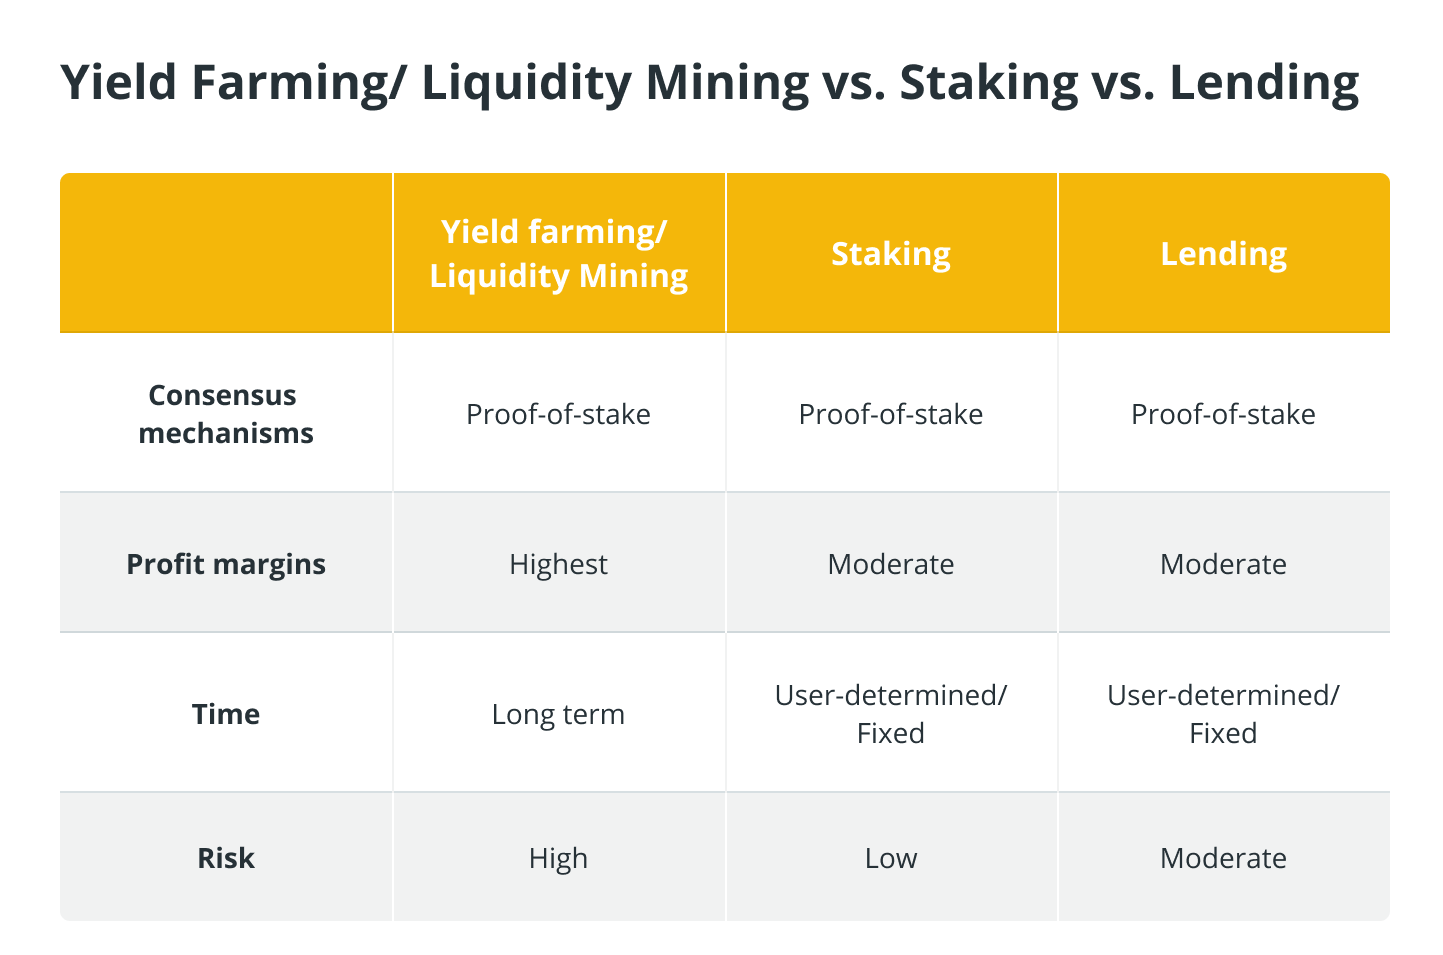 Yield farming / Liquidity Mining vs. Staking vs. Lending